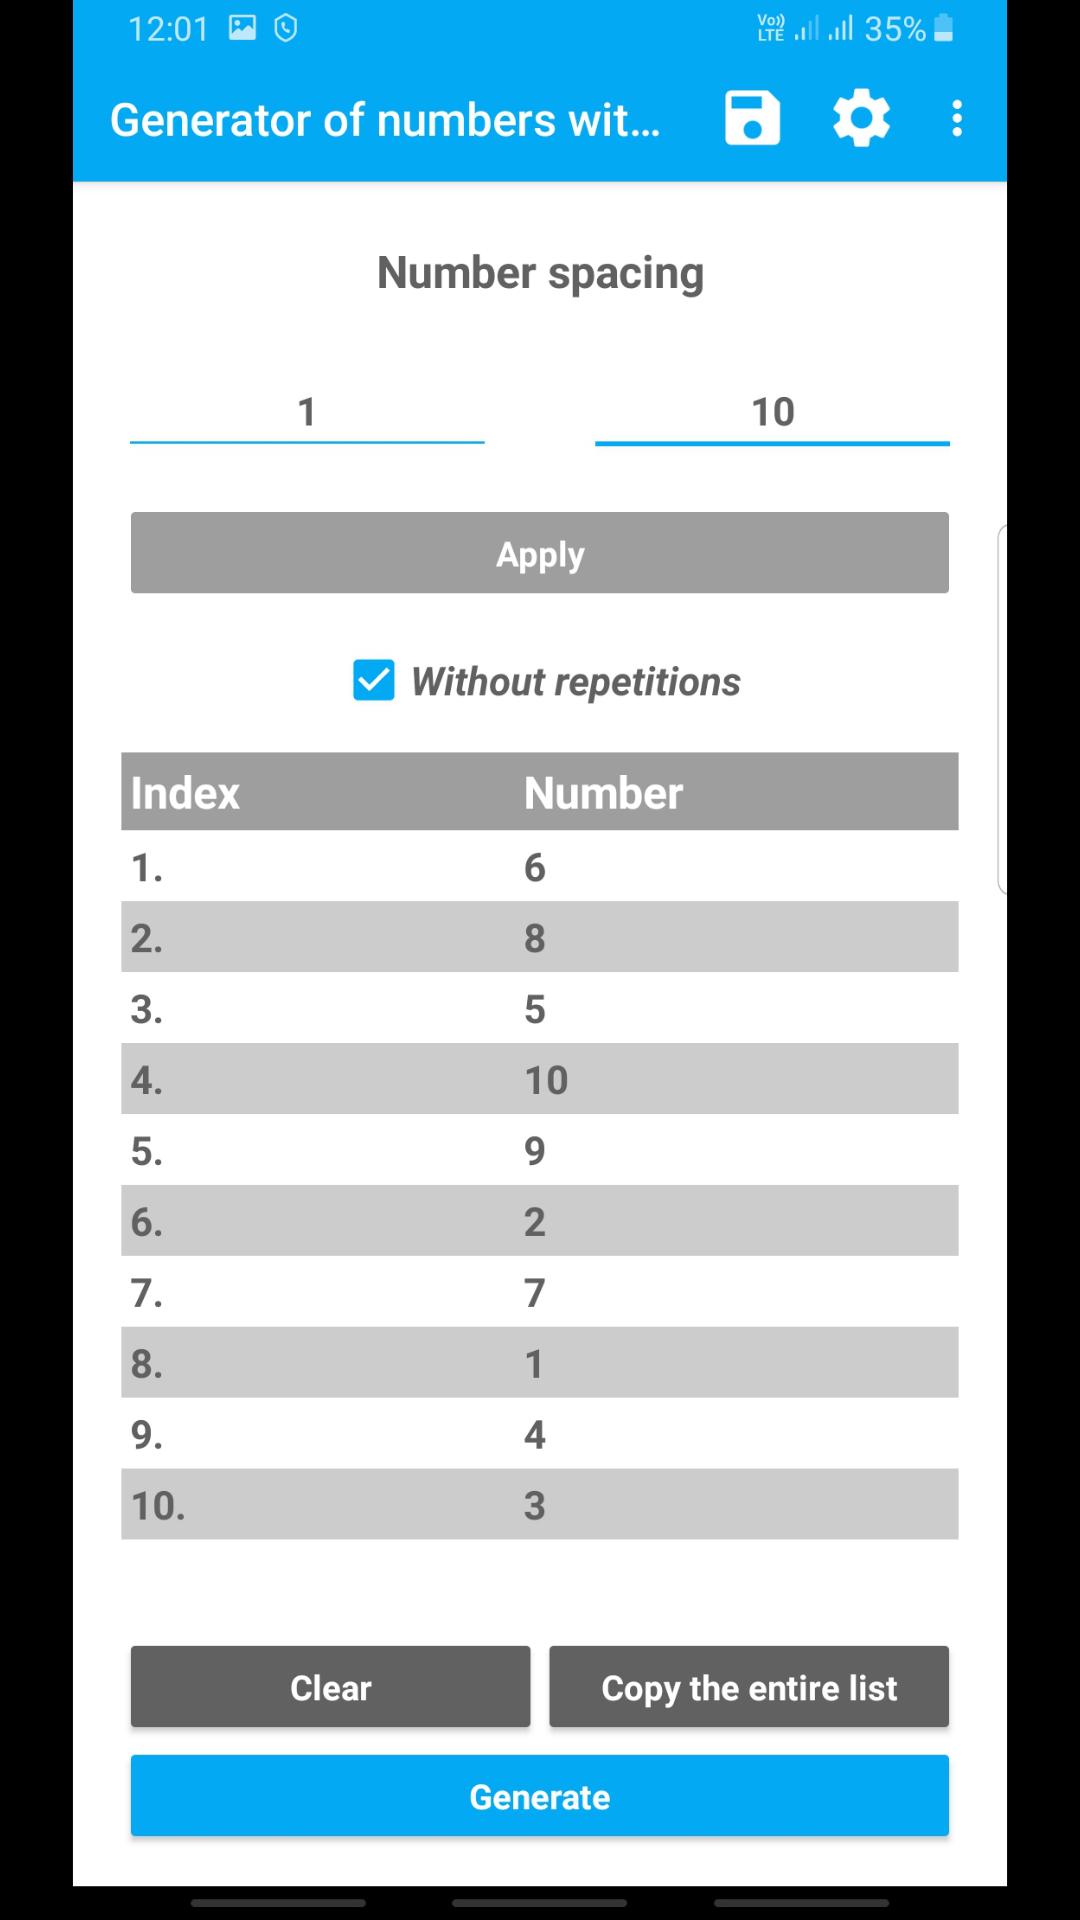 Random Number Generator APK for Android Download